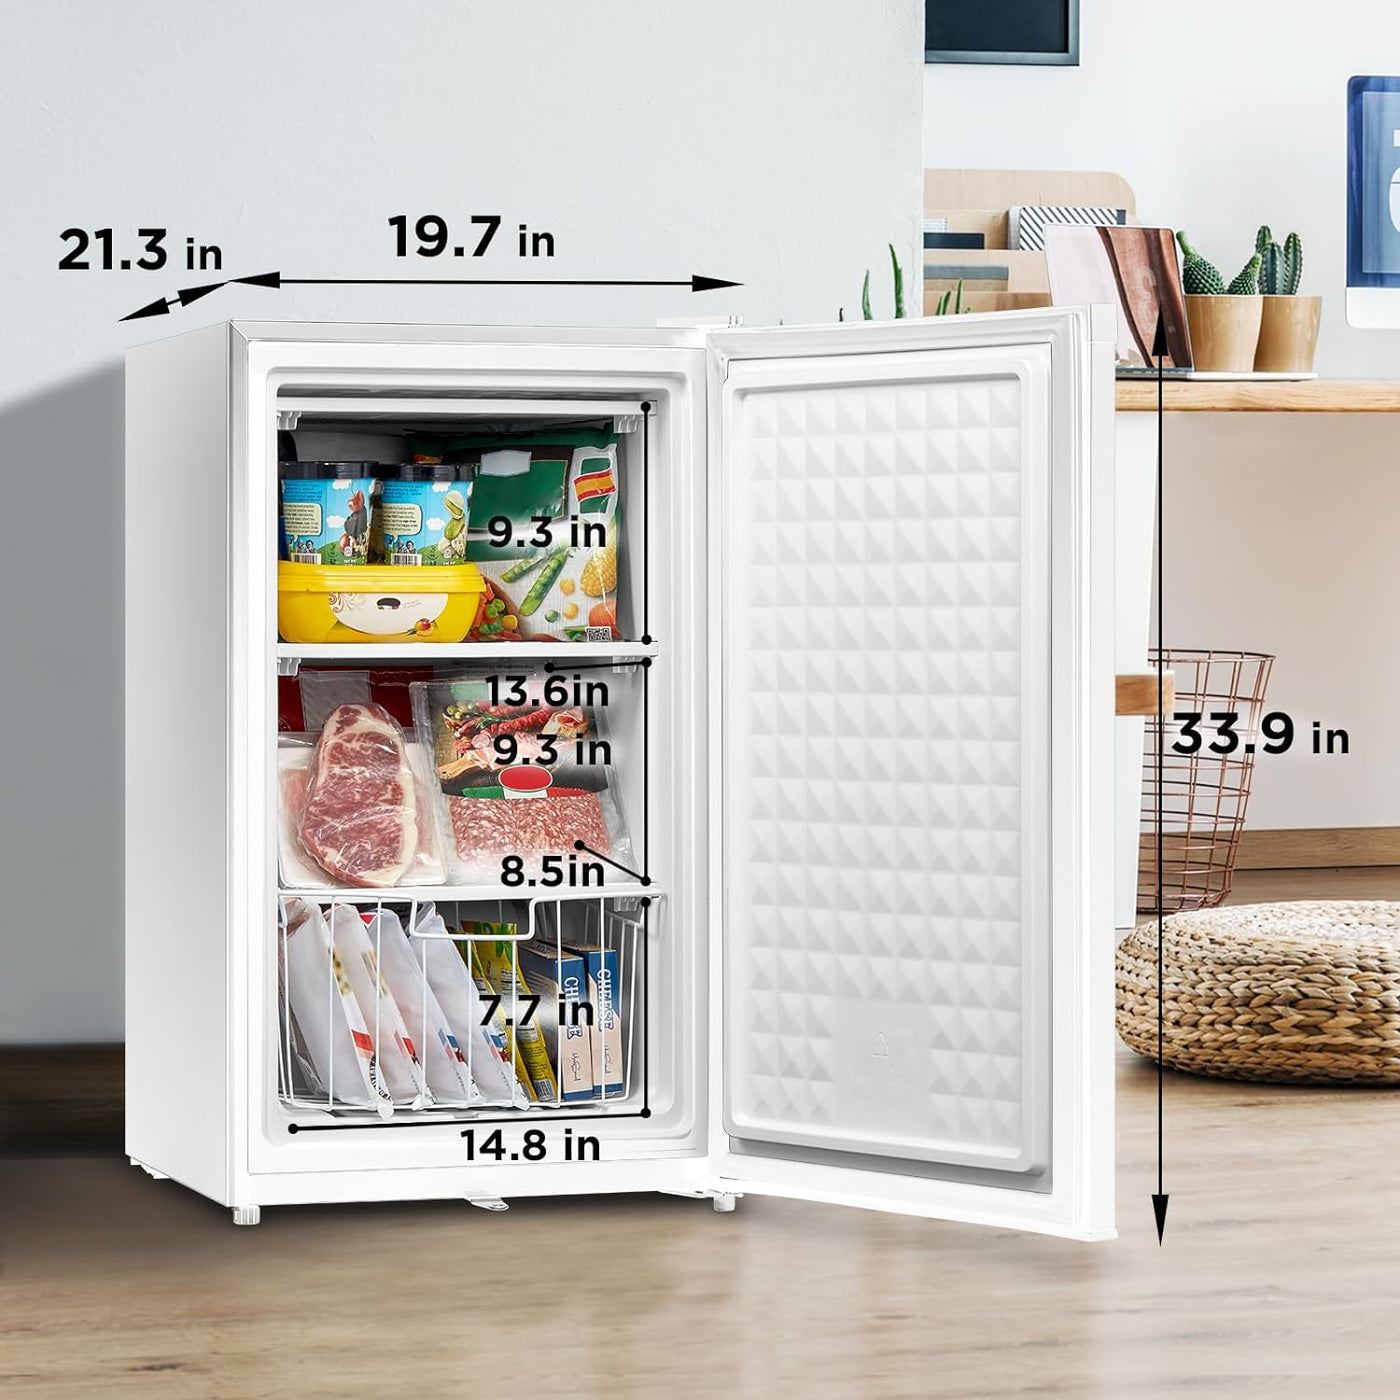 Midea WHS-109FW1 Upright Freezer, 3.0 Cubic Feet, White - $140